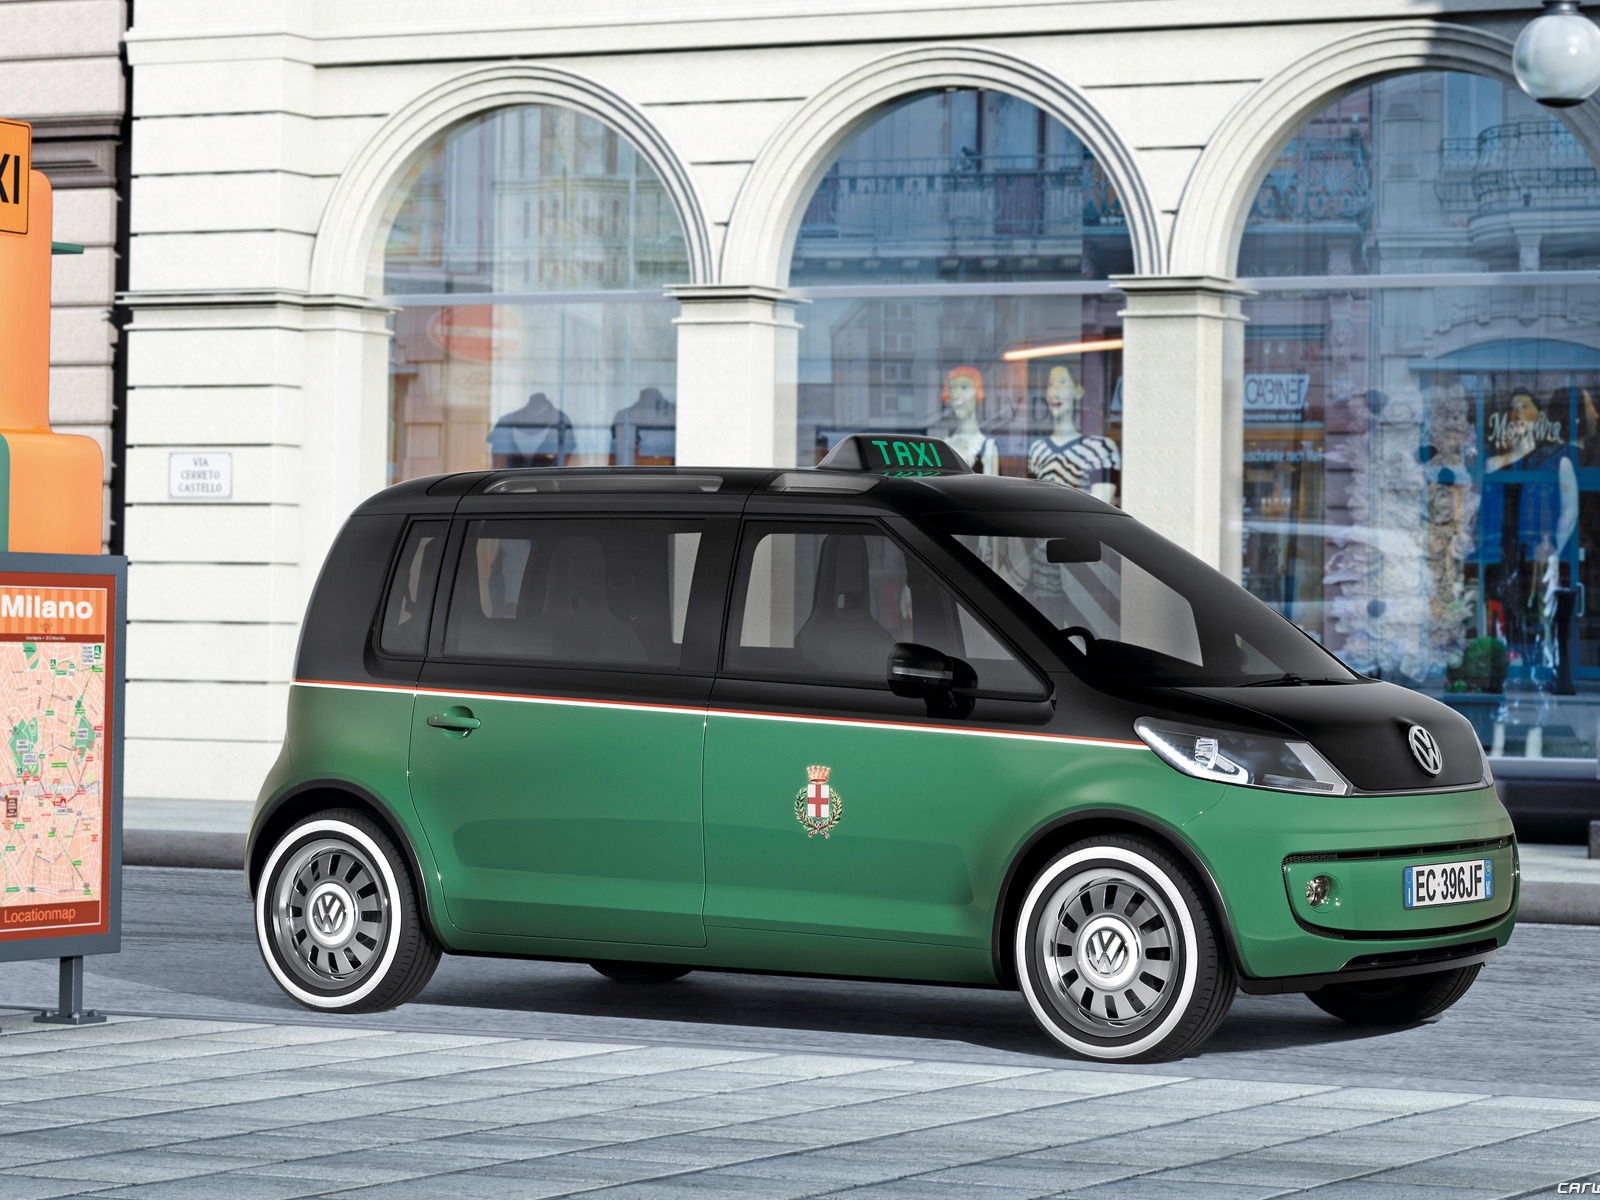 Concept Car Volkswagen Milano Taxi - 2010 大眾 #3 - 1600x1200